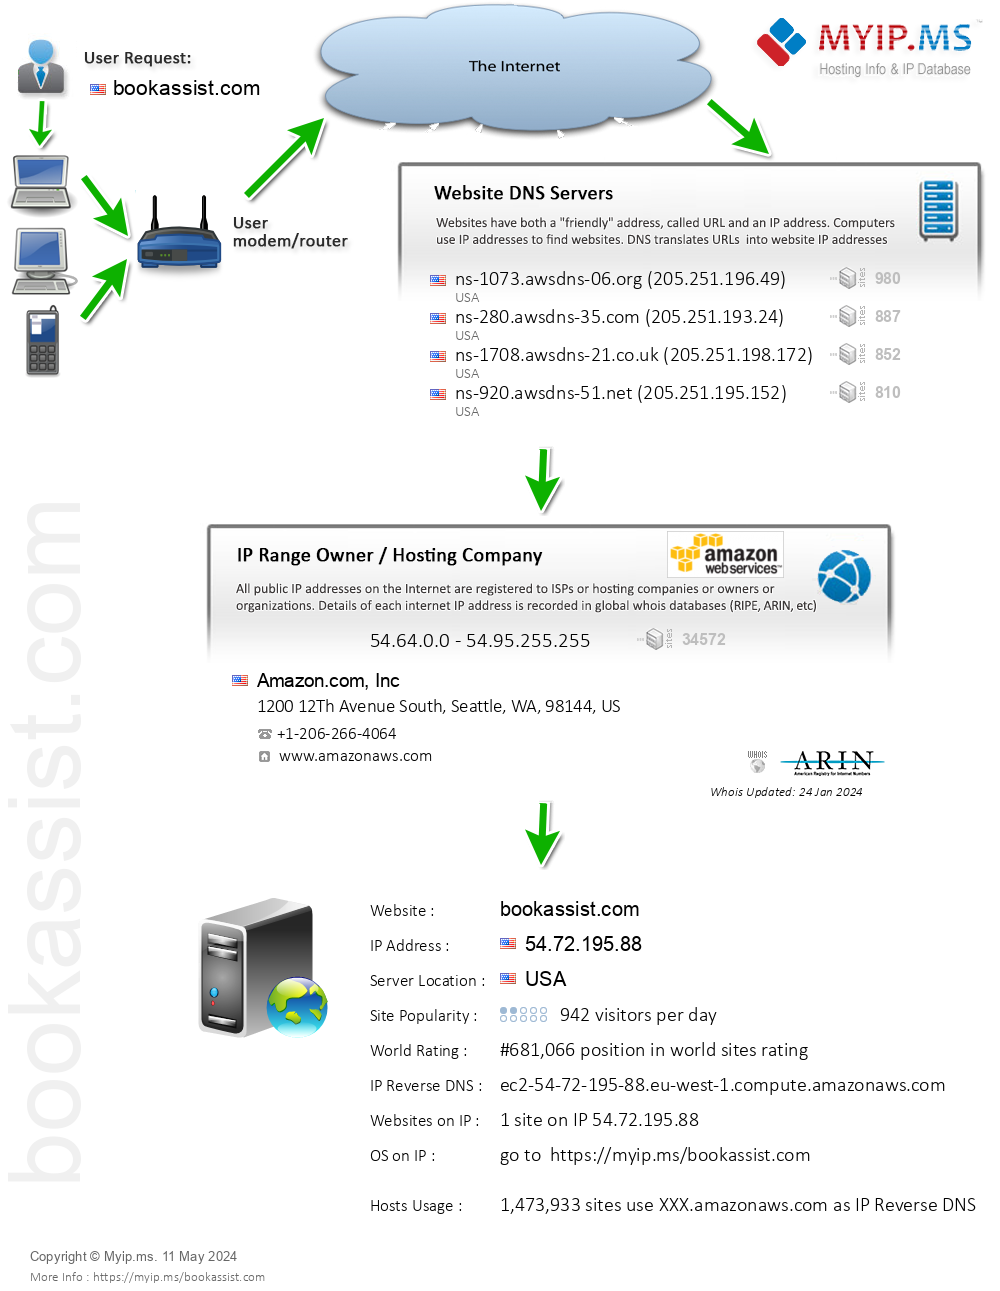 Bookassist.com - Website Hosting Visual IP Diagram